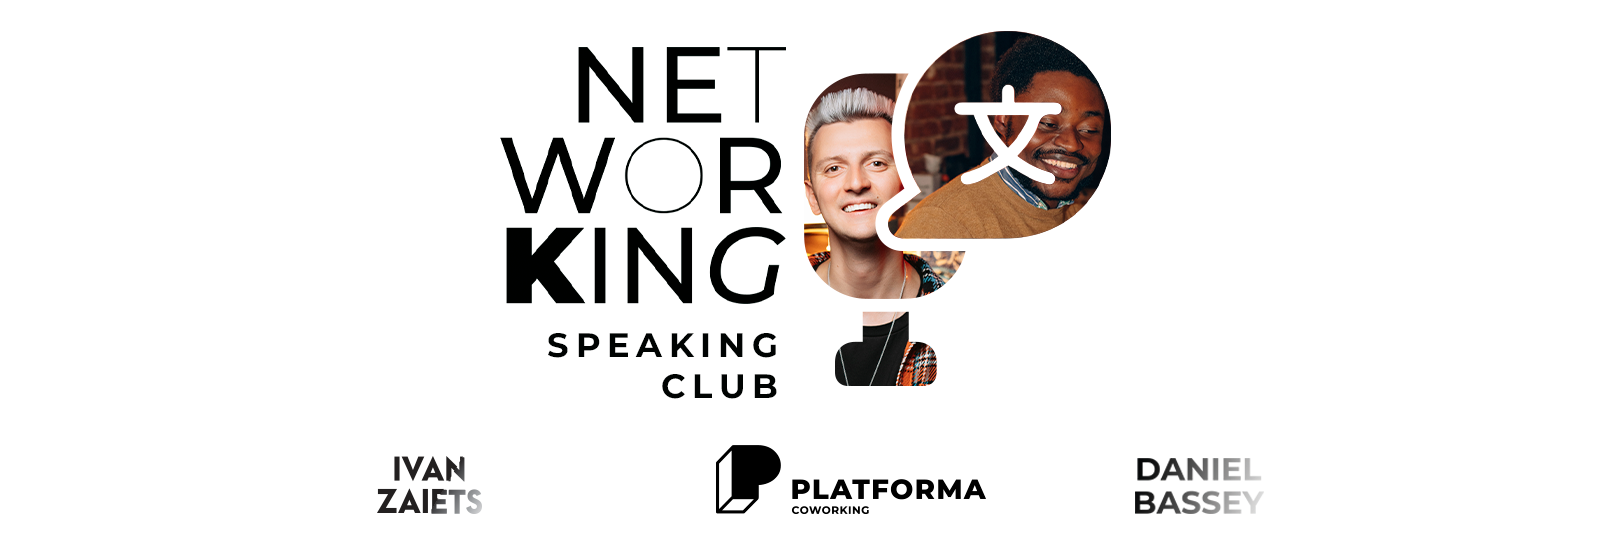 Networking Speaking Club #10